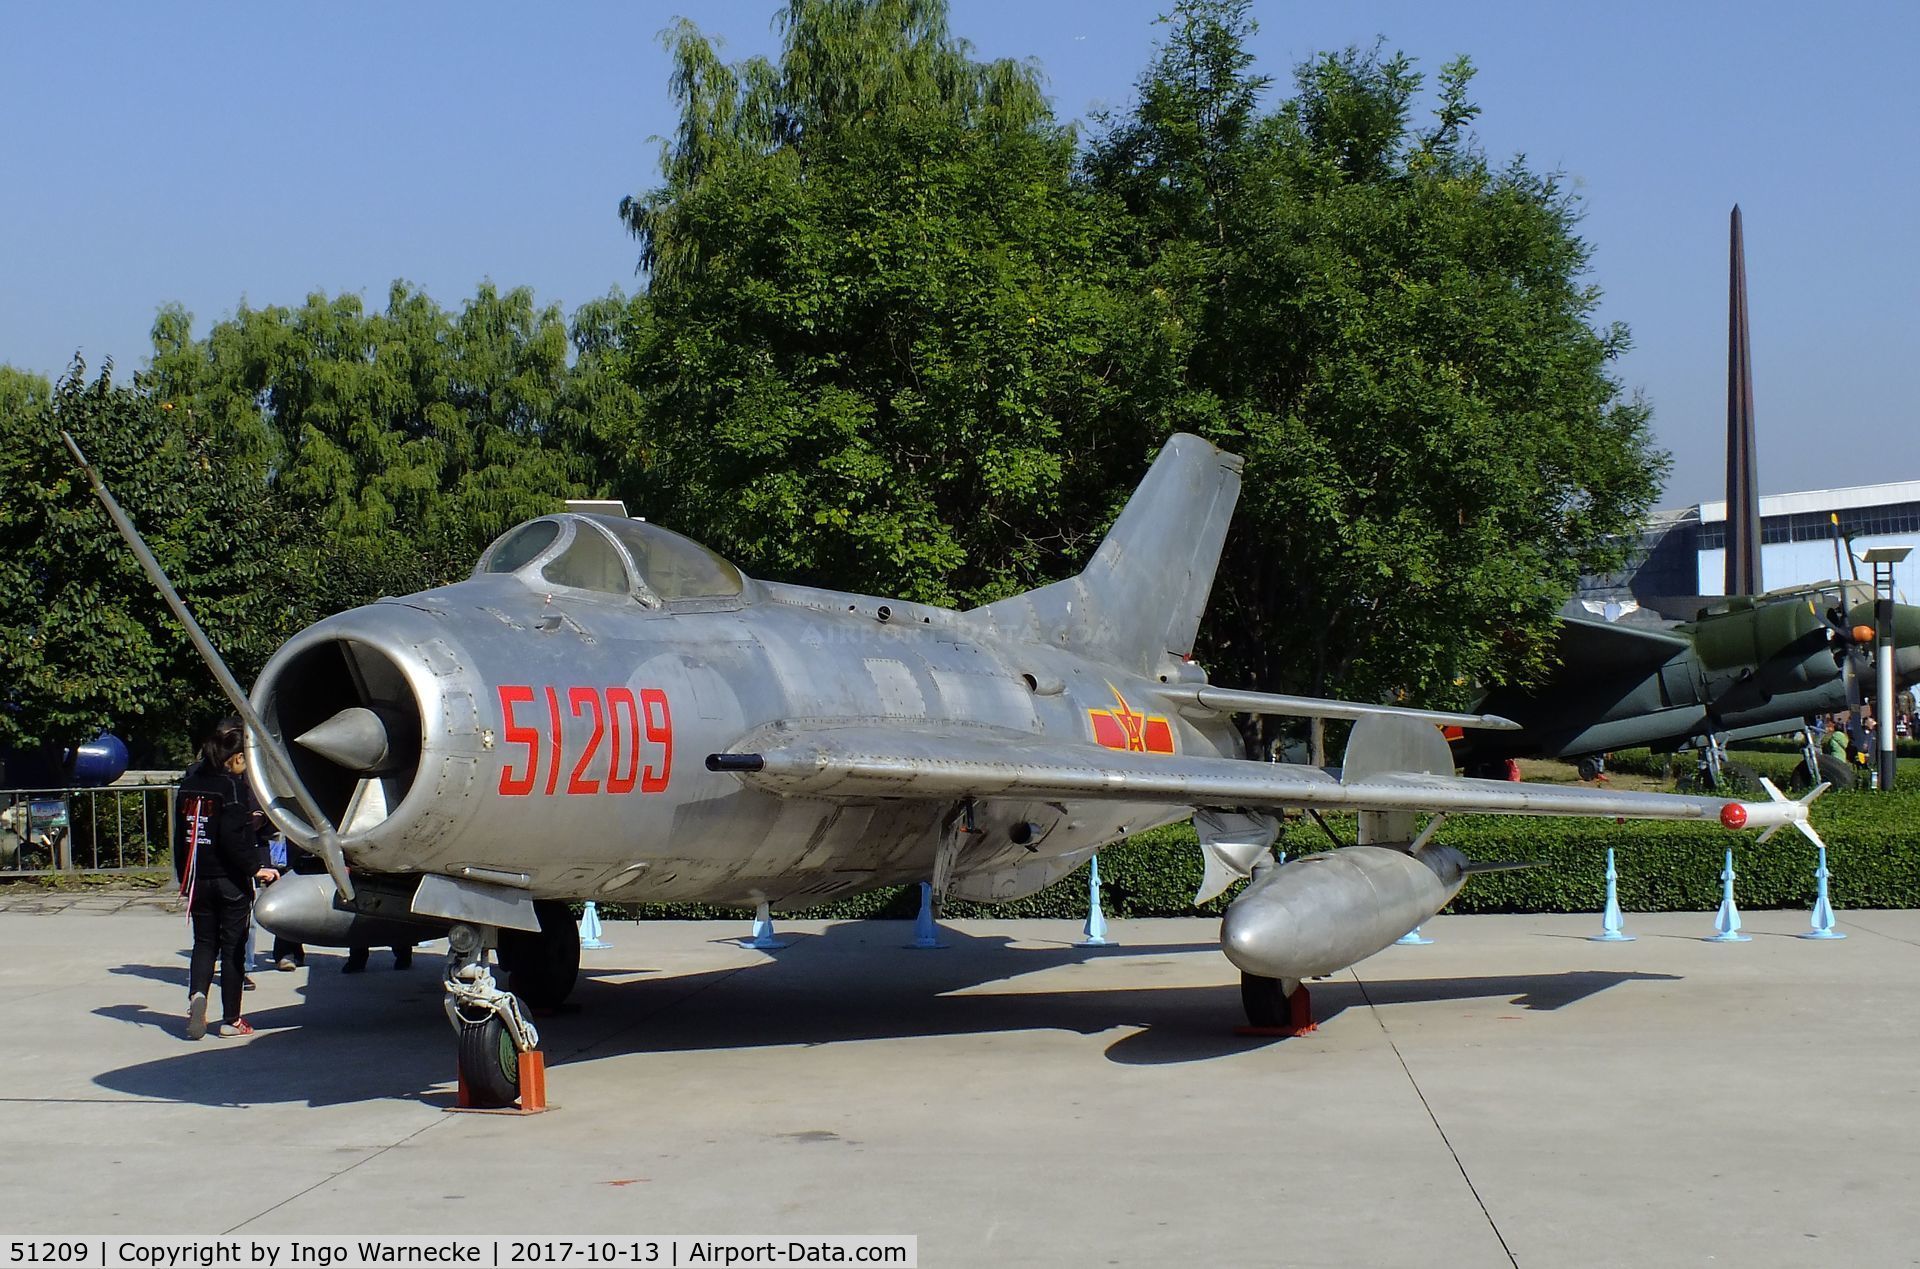 51209, Shenyang J-6 C/N 4947, Shenyang J-6 III (chinese version of the MiG-19 FARMER) at the China Aviation Museum Datangshan